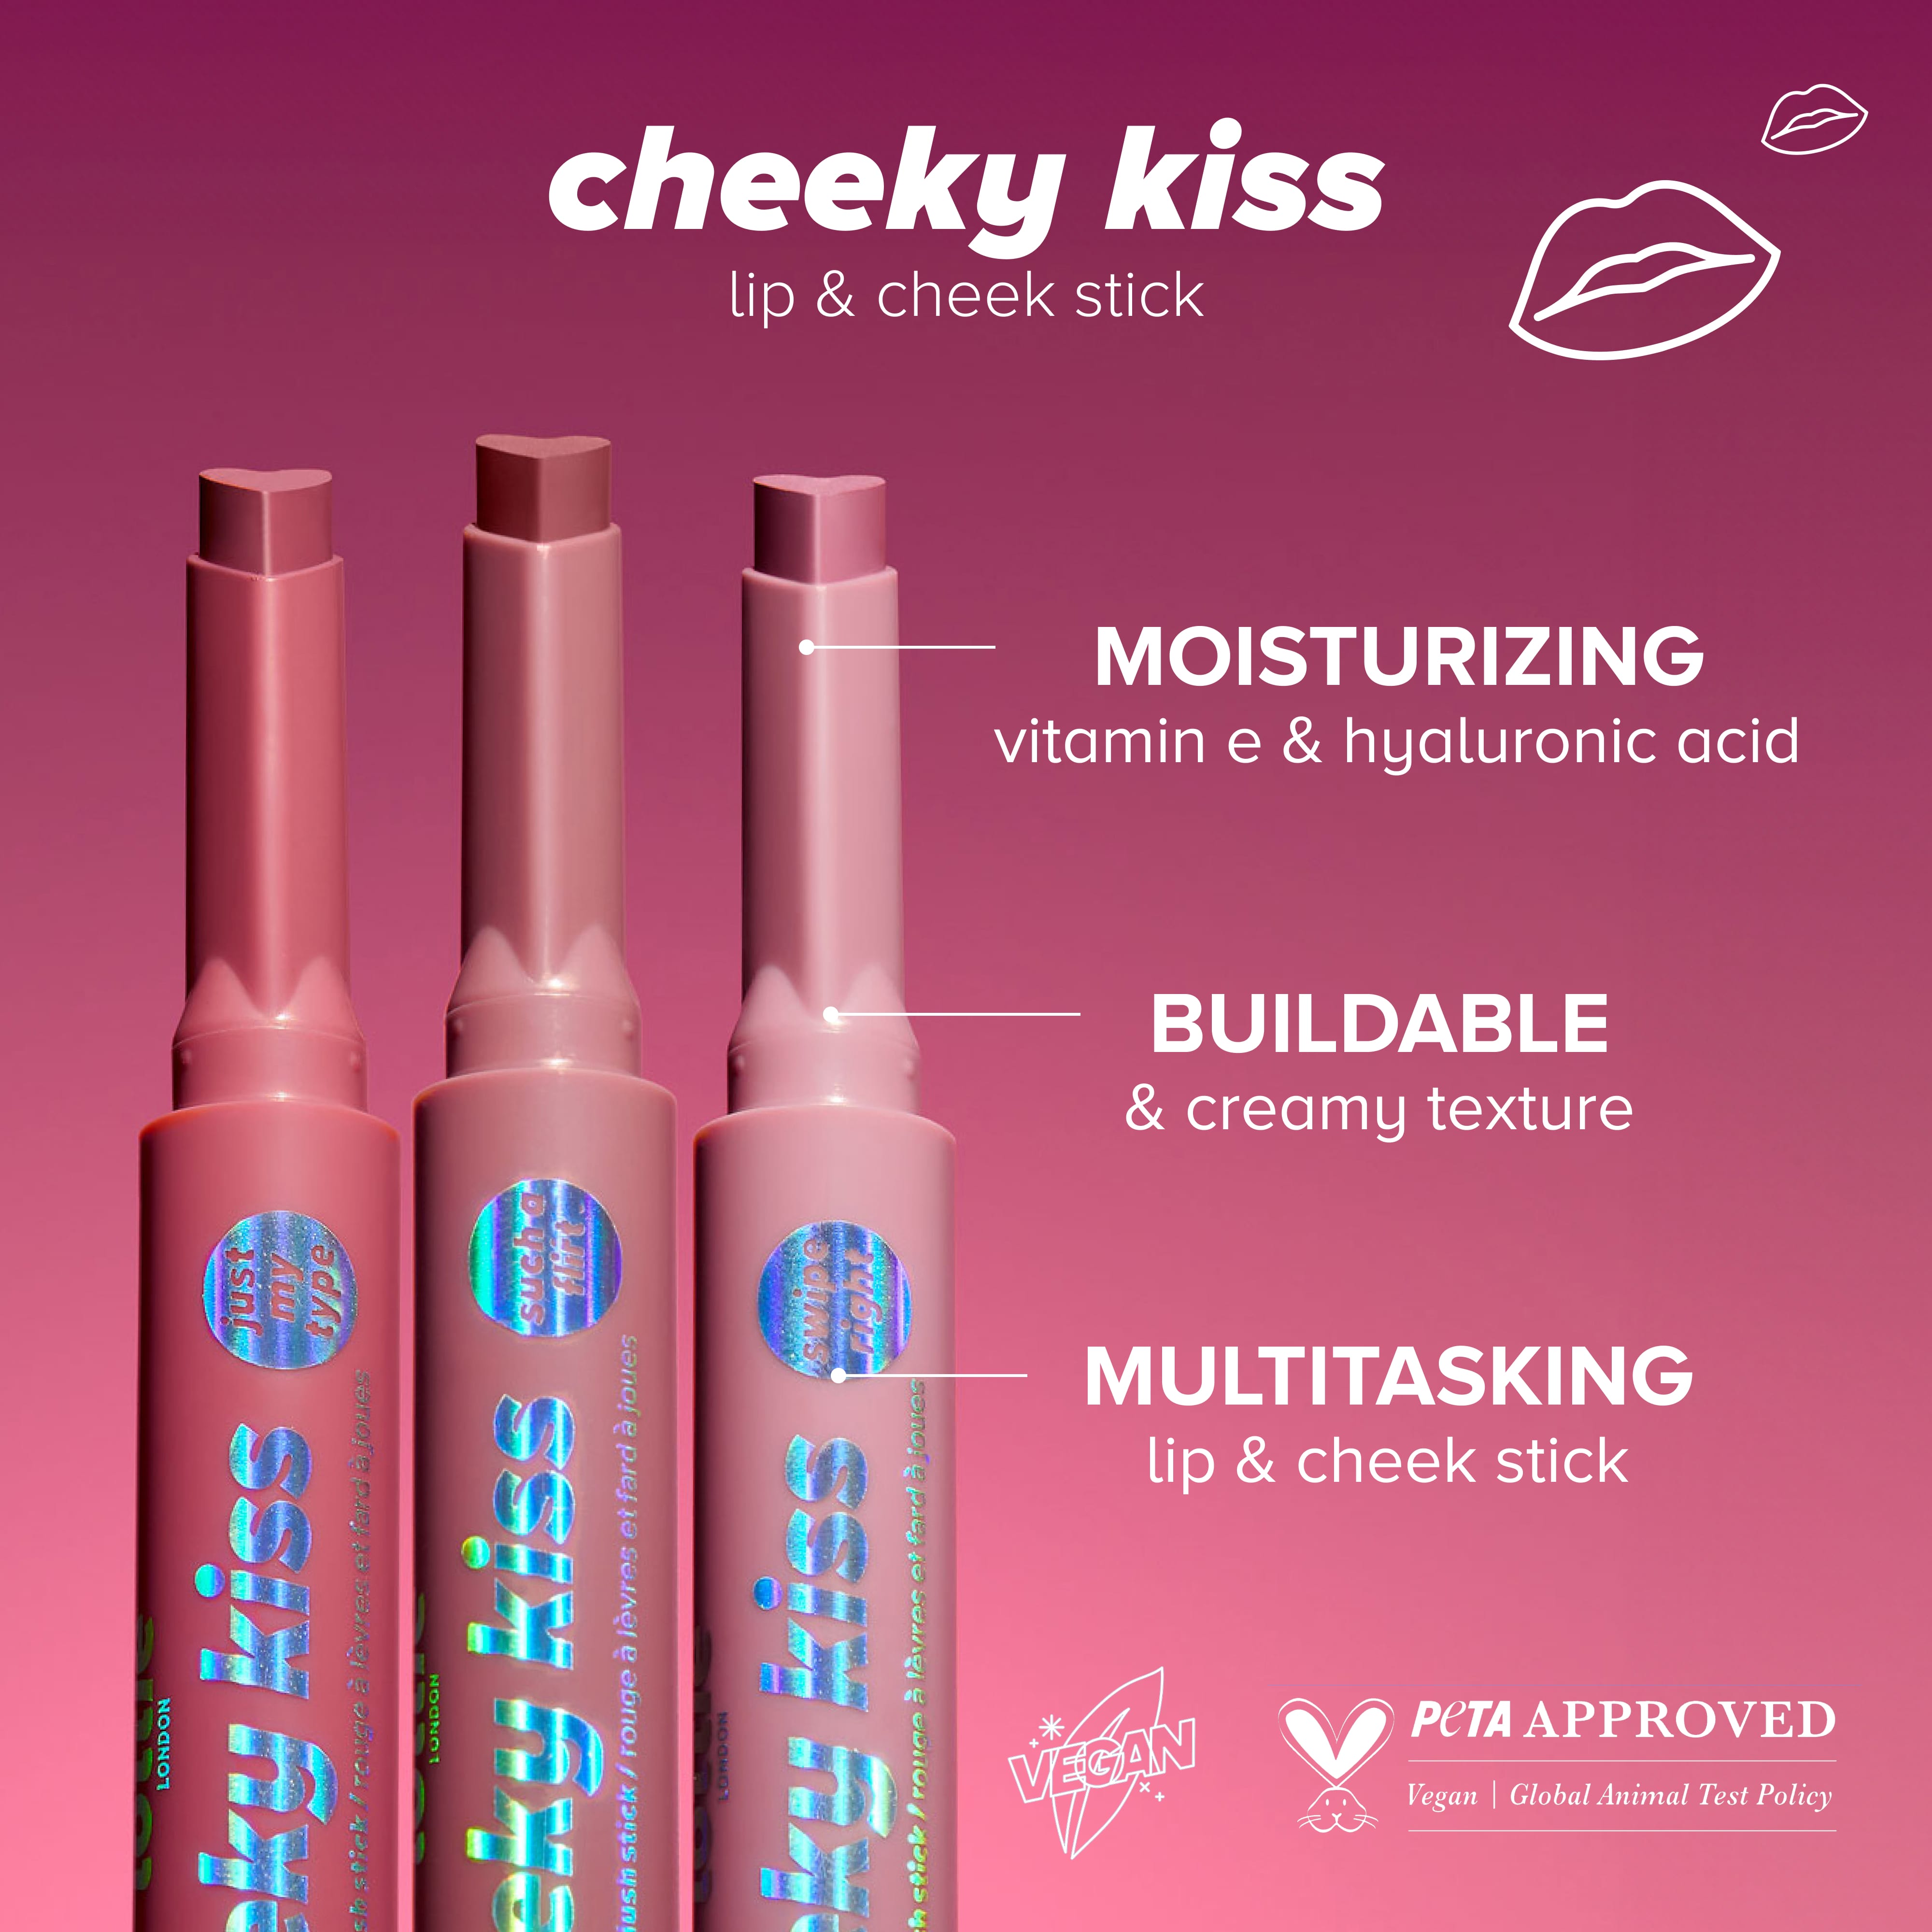 cheeky kiss lip & cheek stick